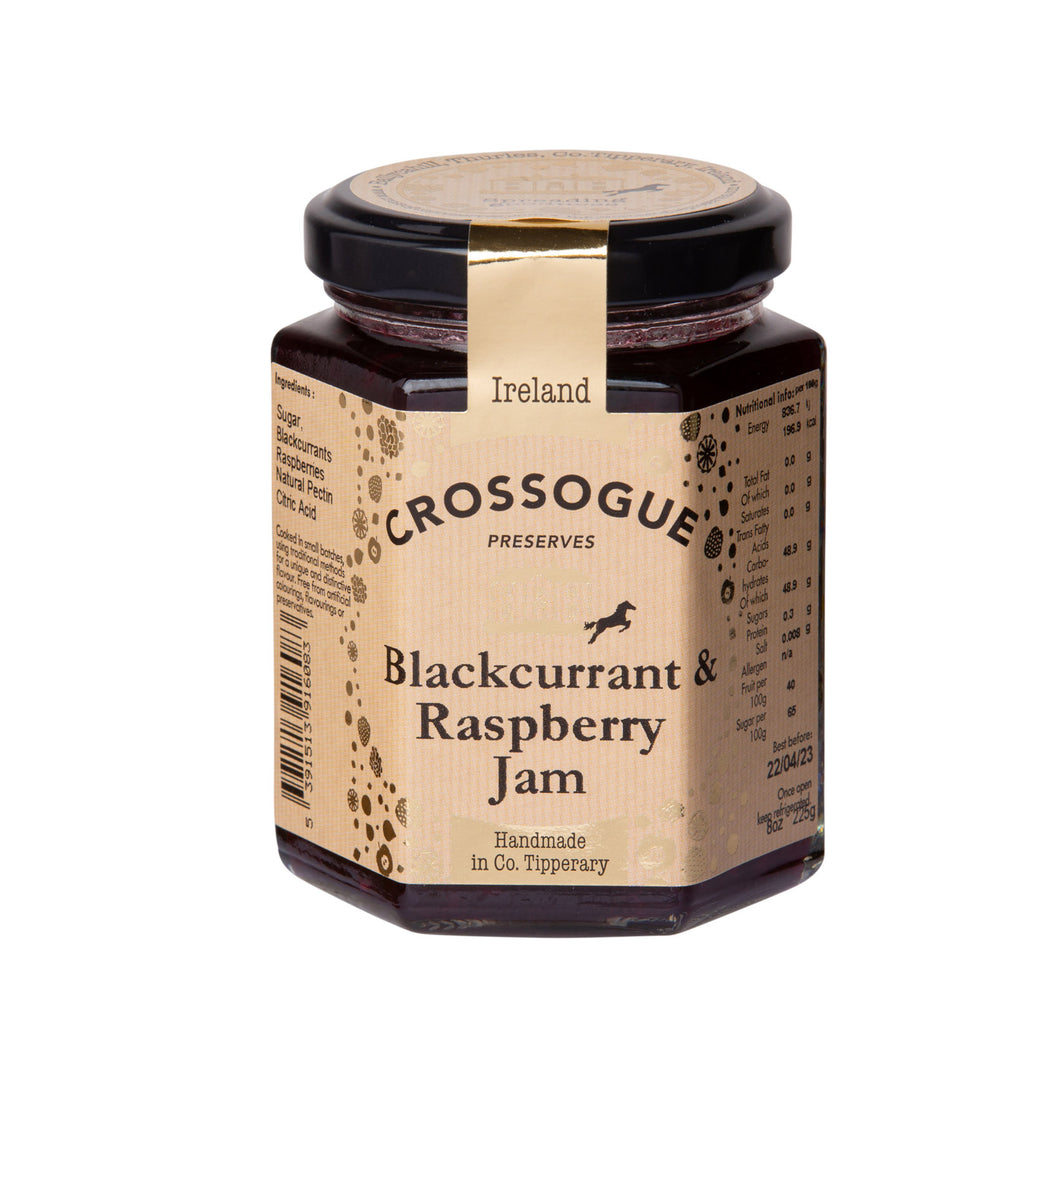 Blackcurrant & Raspberry Jam